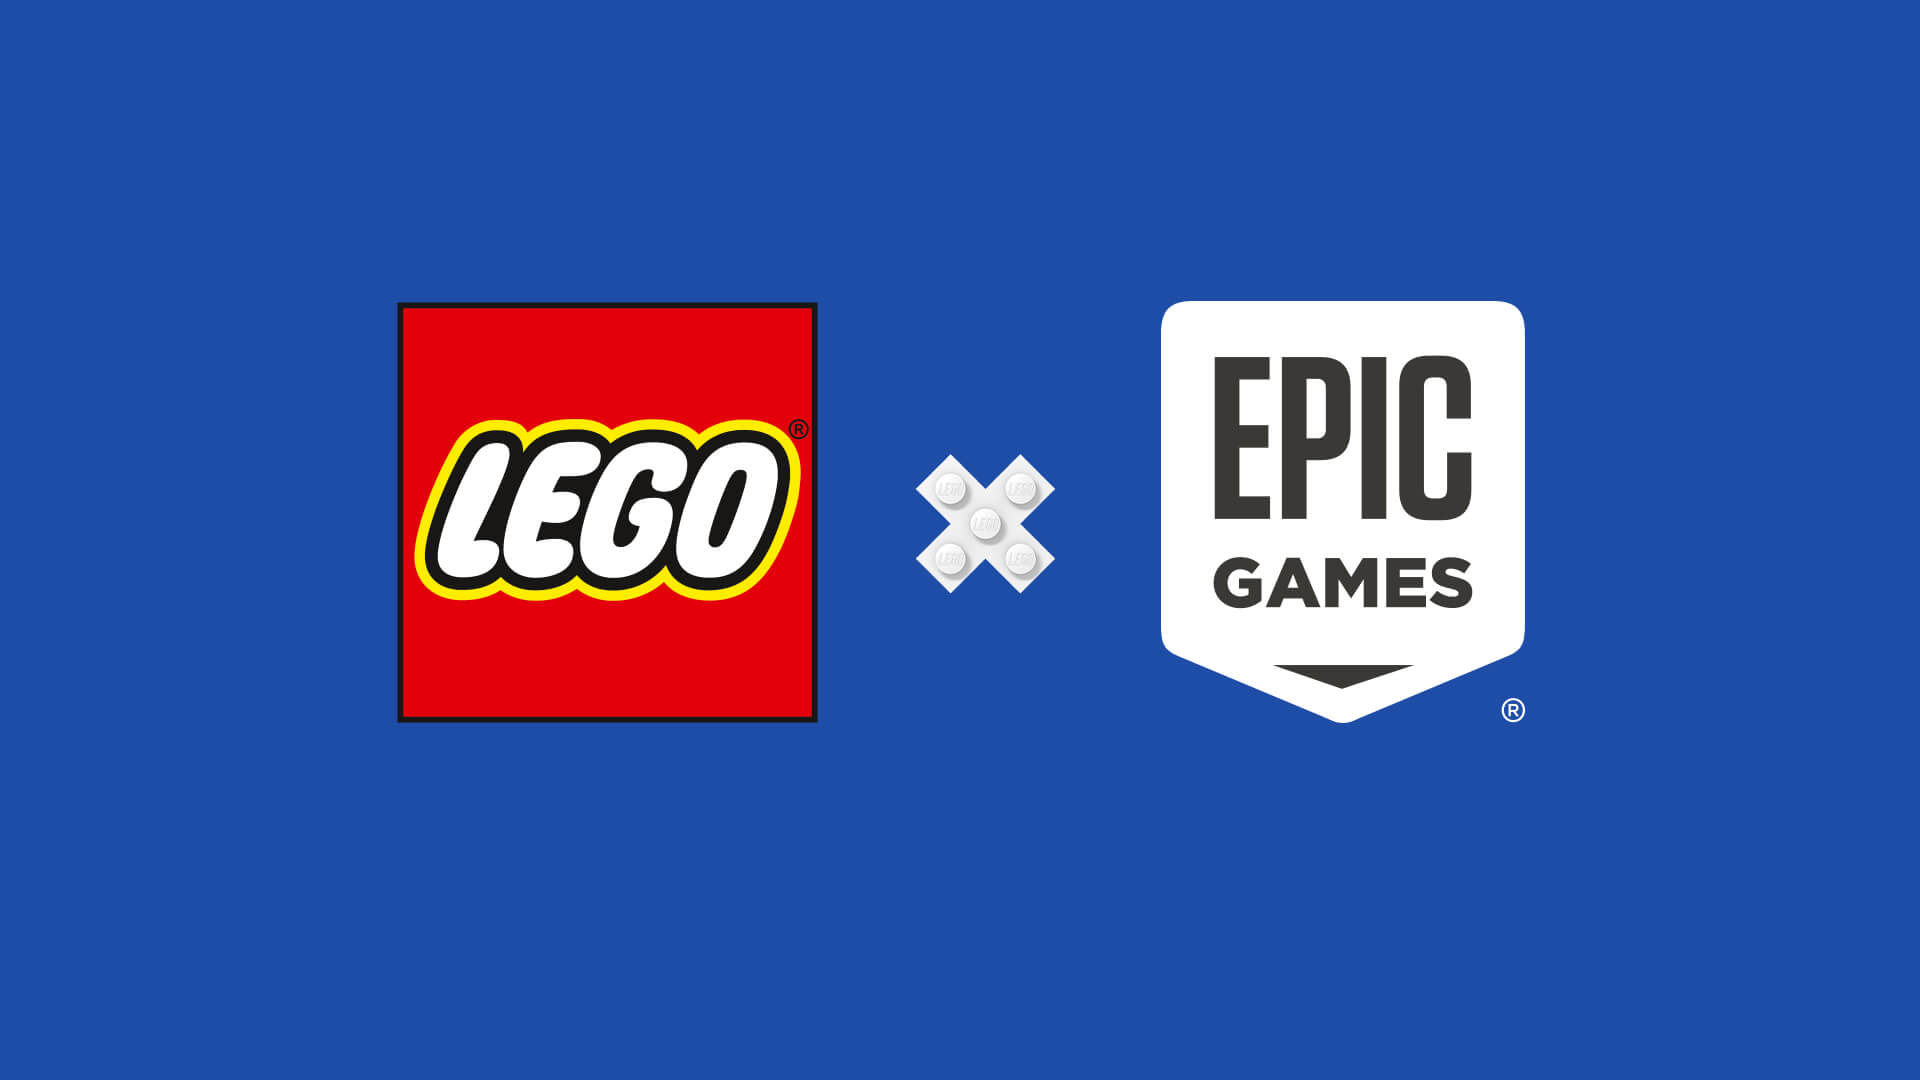 Epic kicks off Fortnite's new era with Lego Fortnite - The Verge